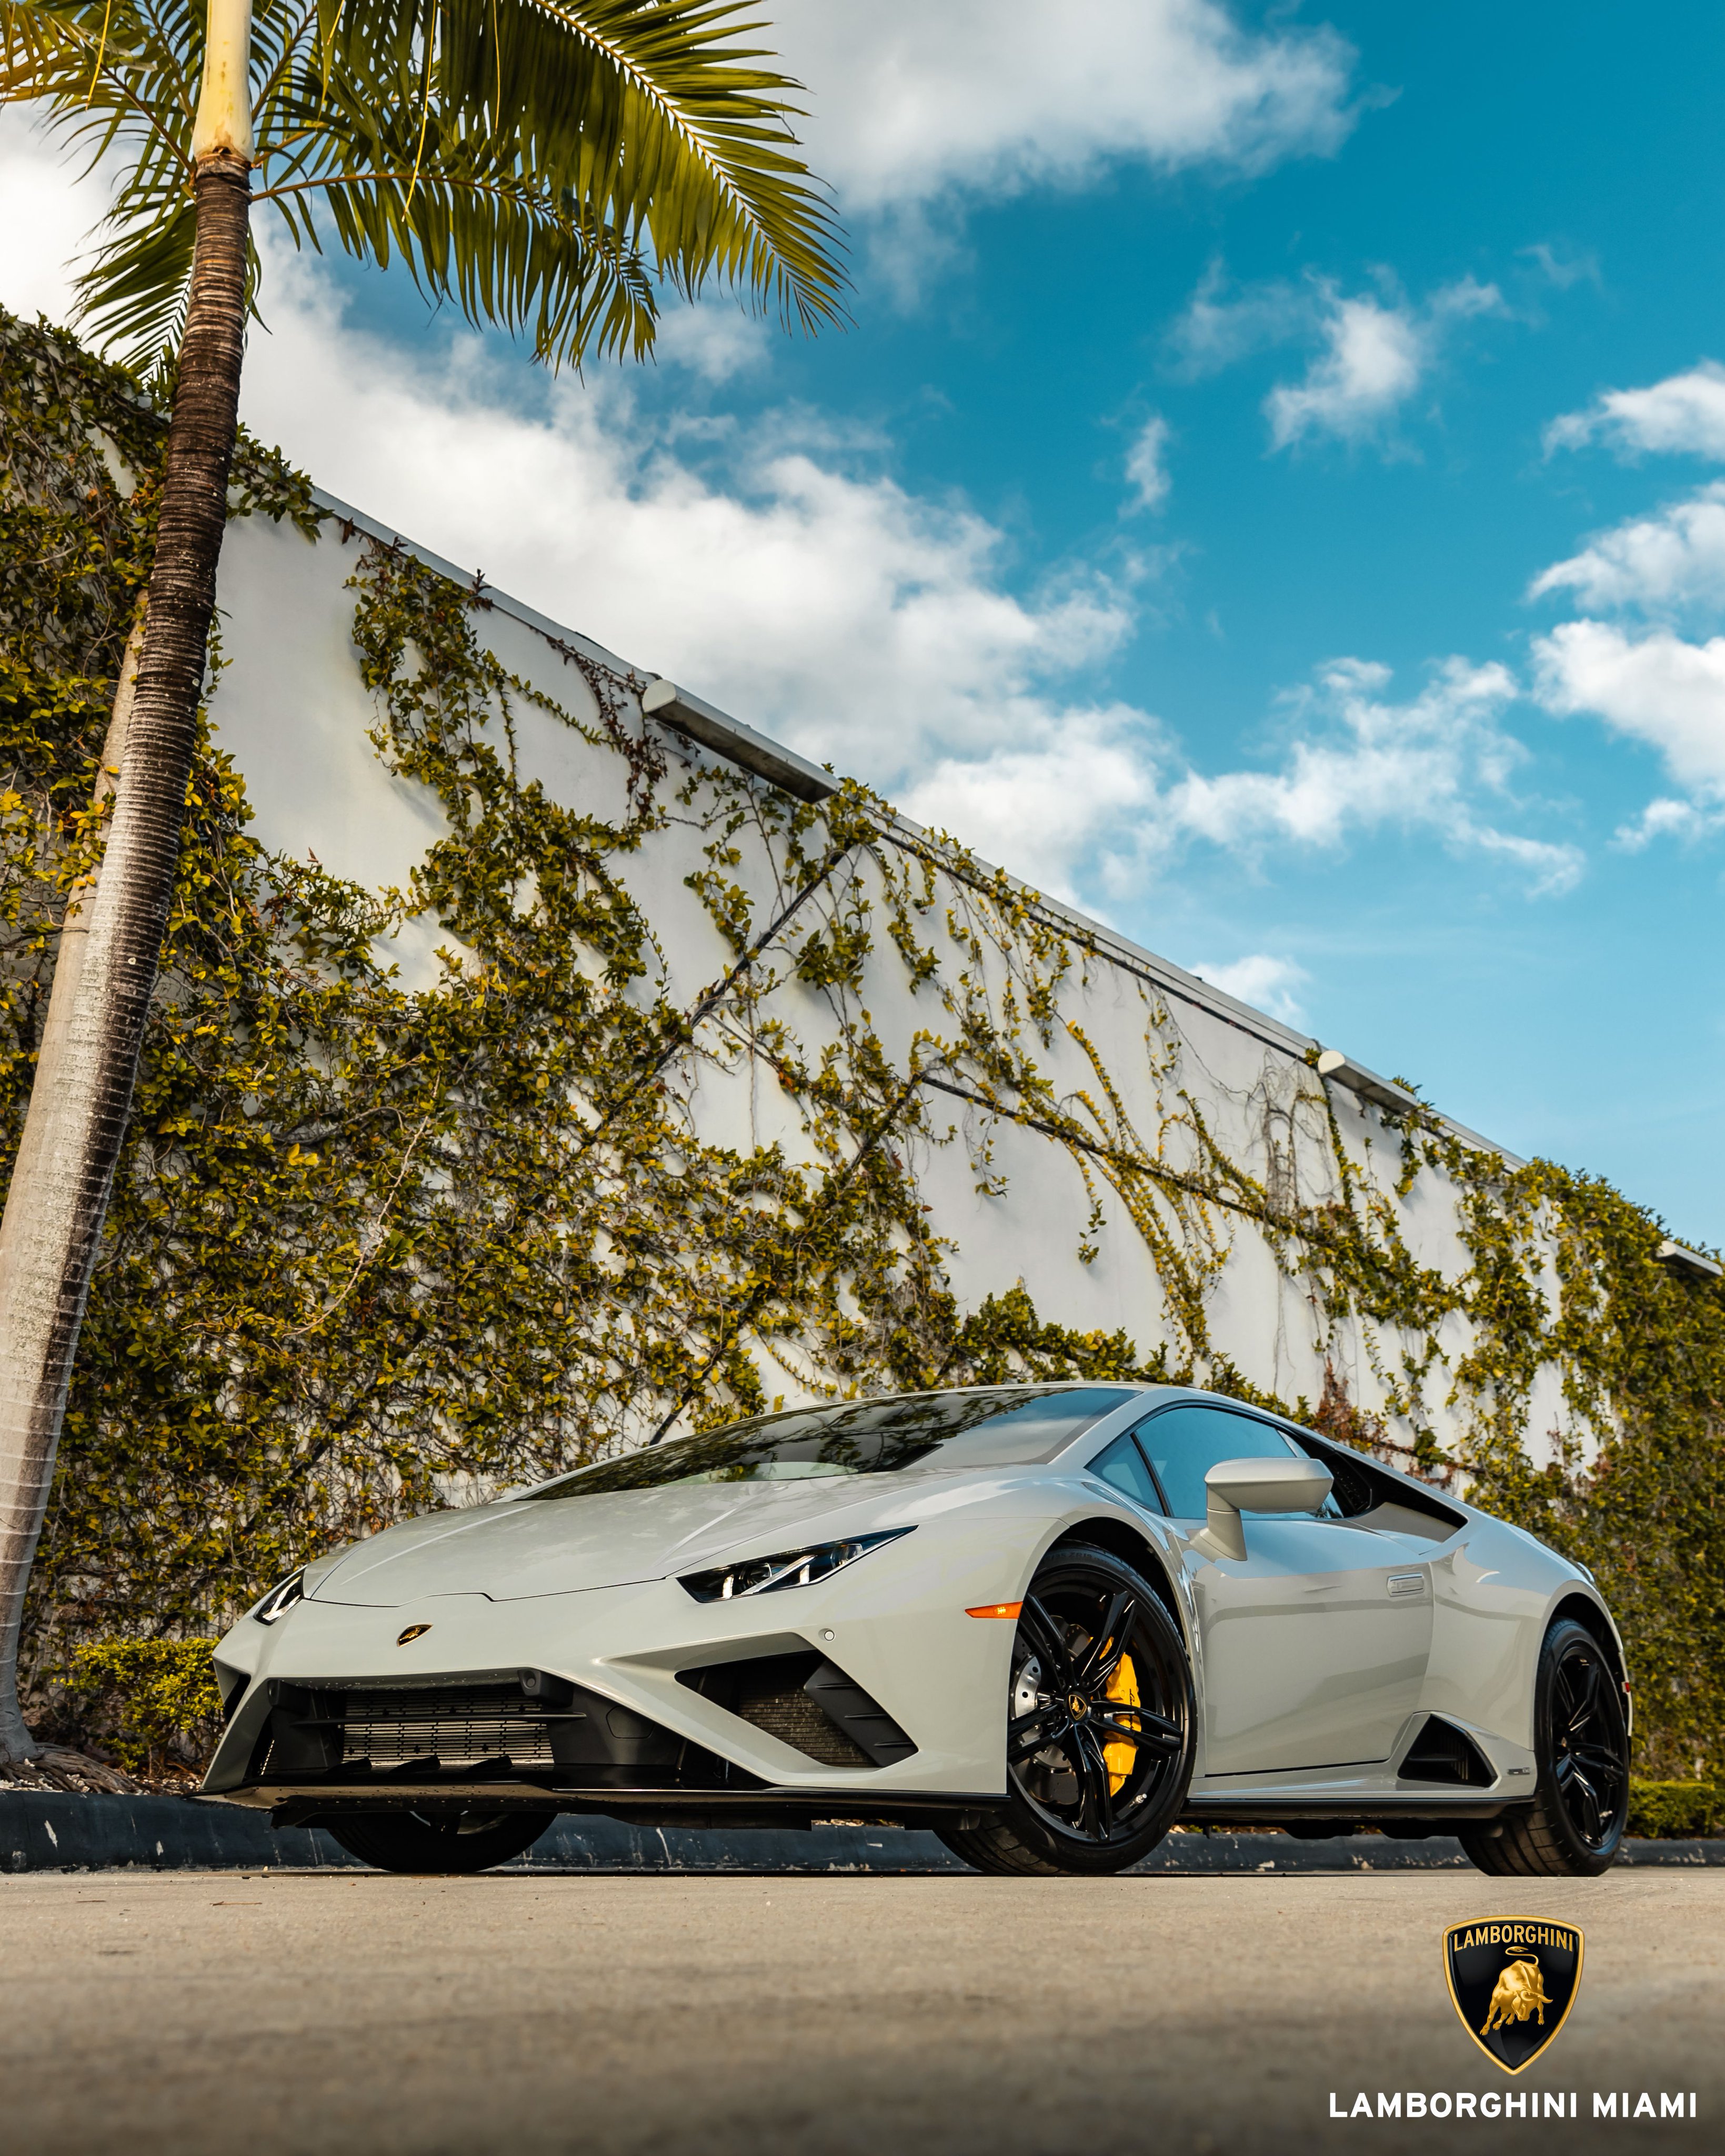 Lamborghini Miami (@LamboMiami) / Twitter